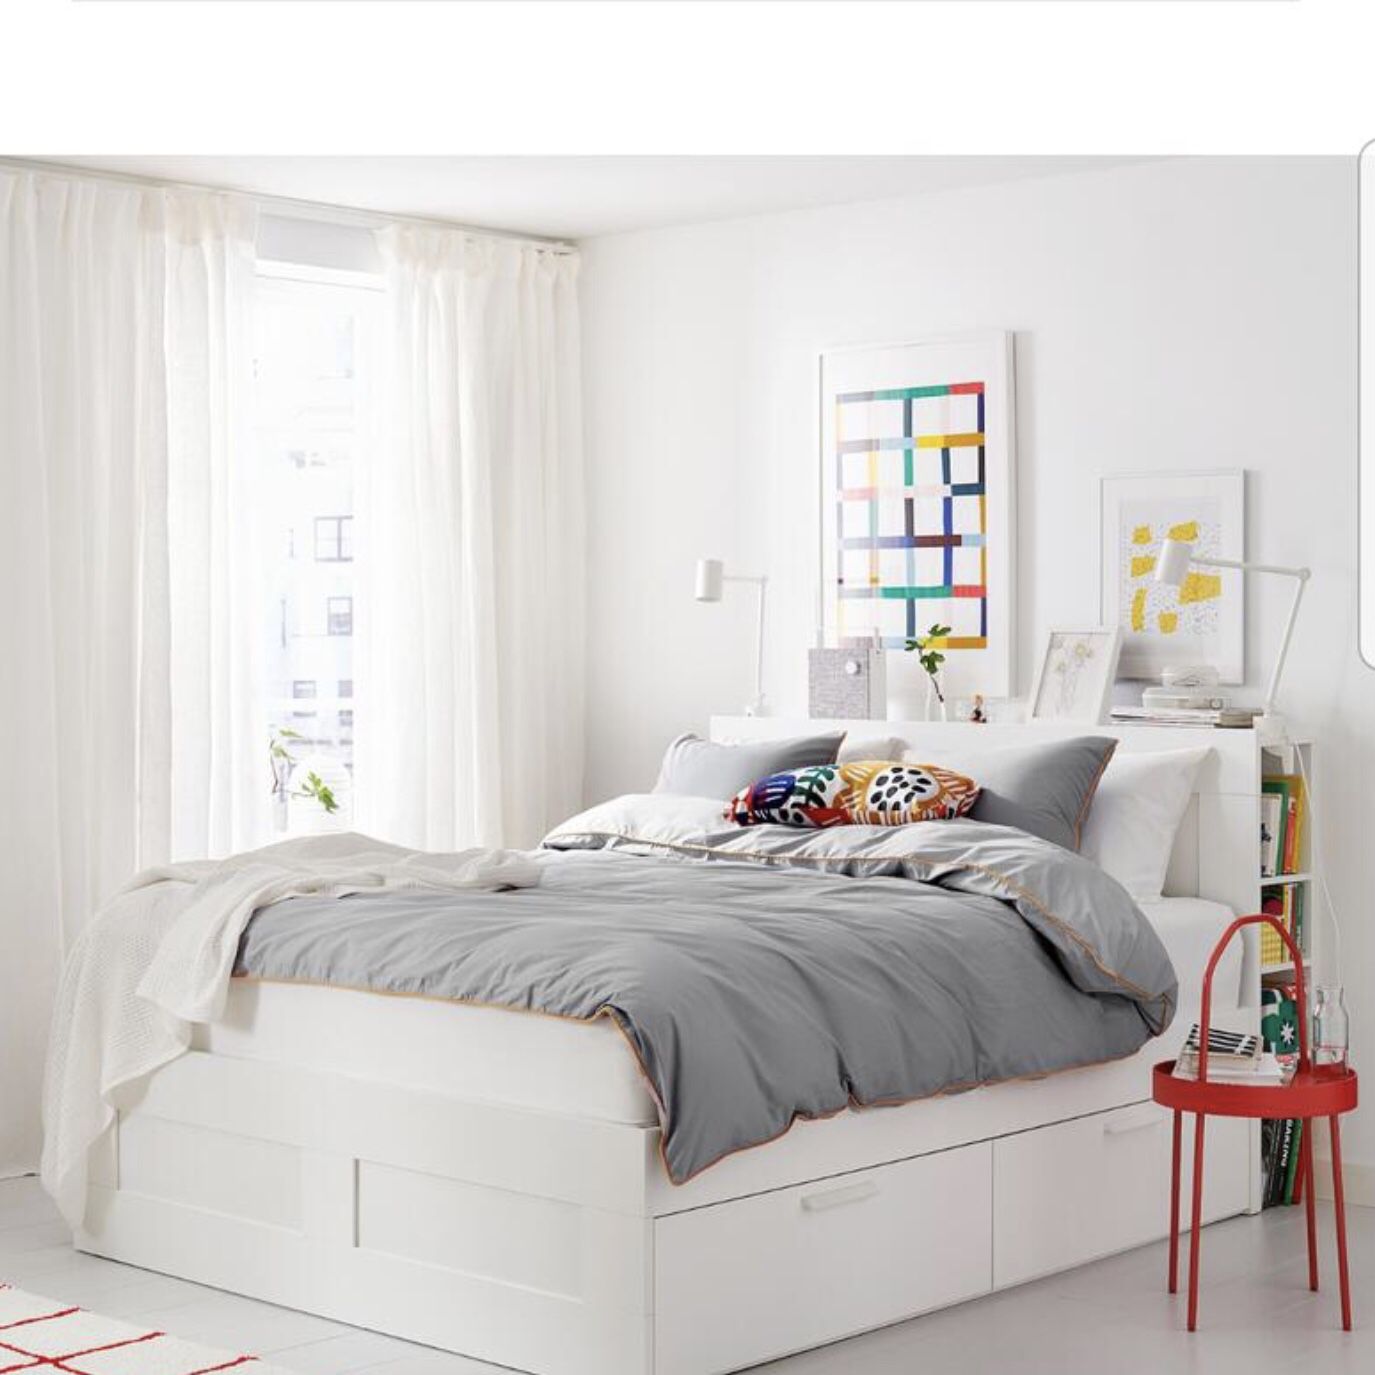 IKEA full-size bedroom set